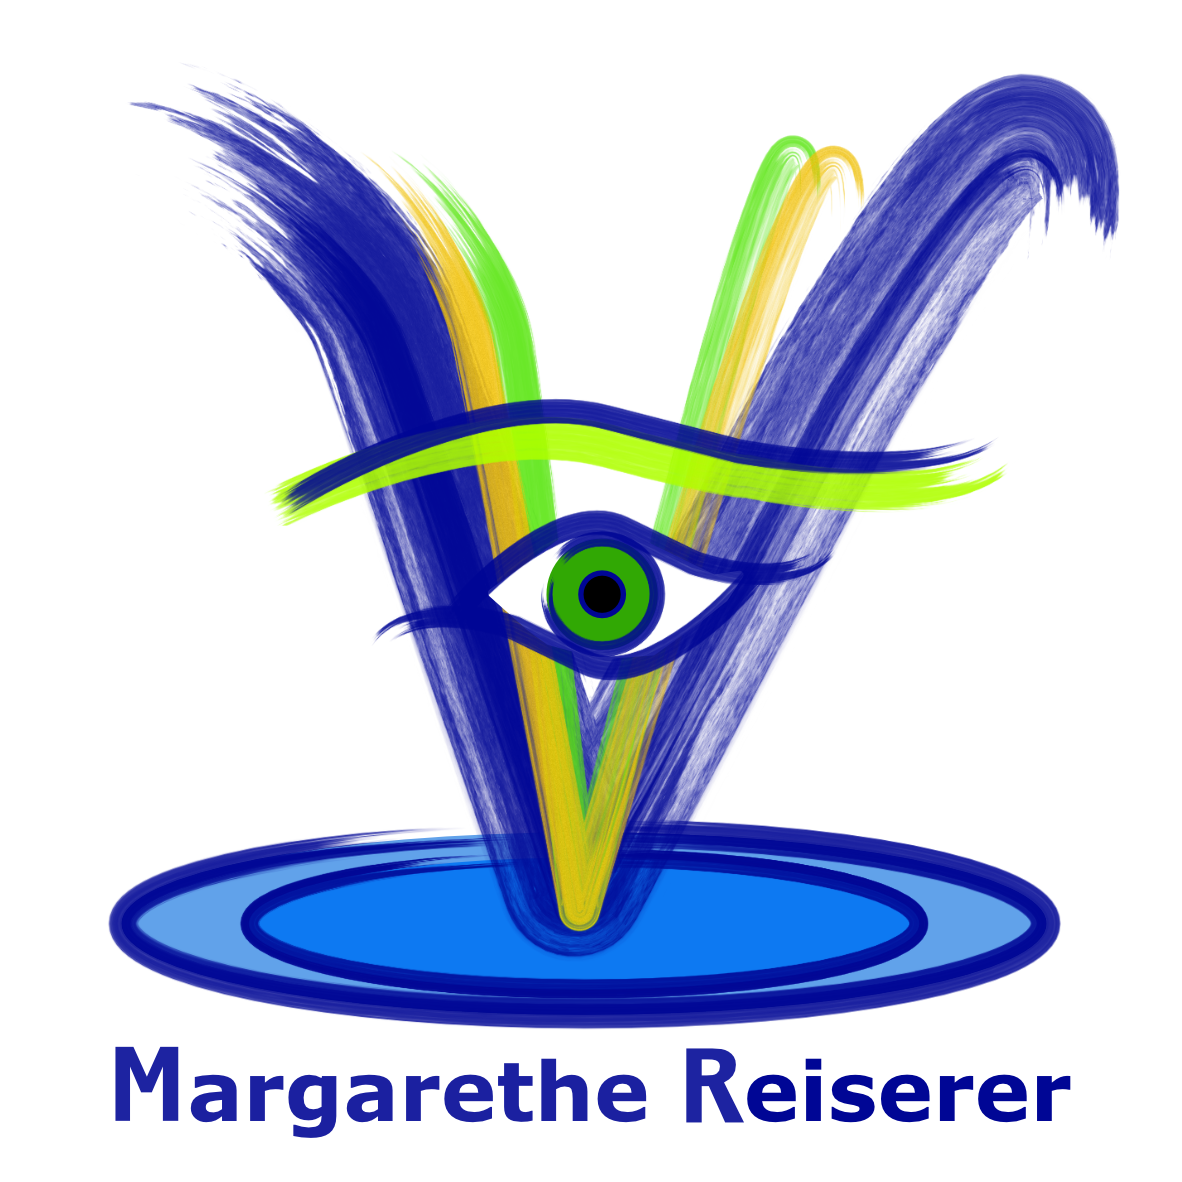 Yoga München Margarethe Reiserer